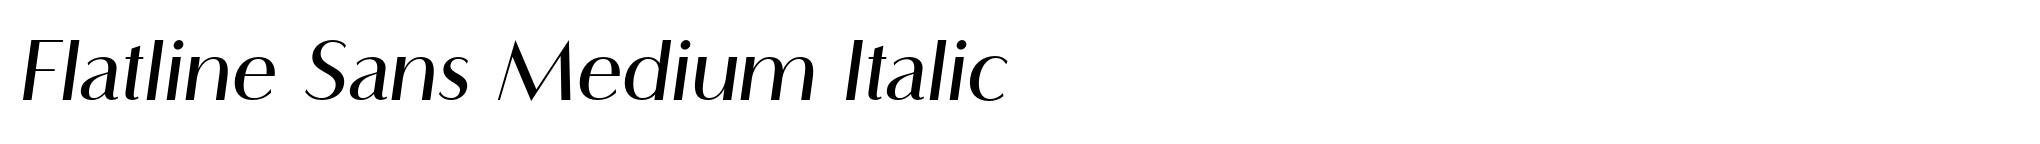 Flatline Sans Medium Italic image